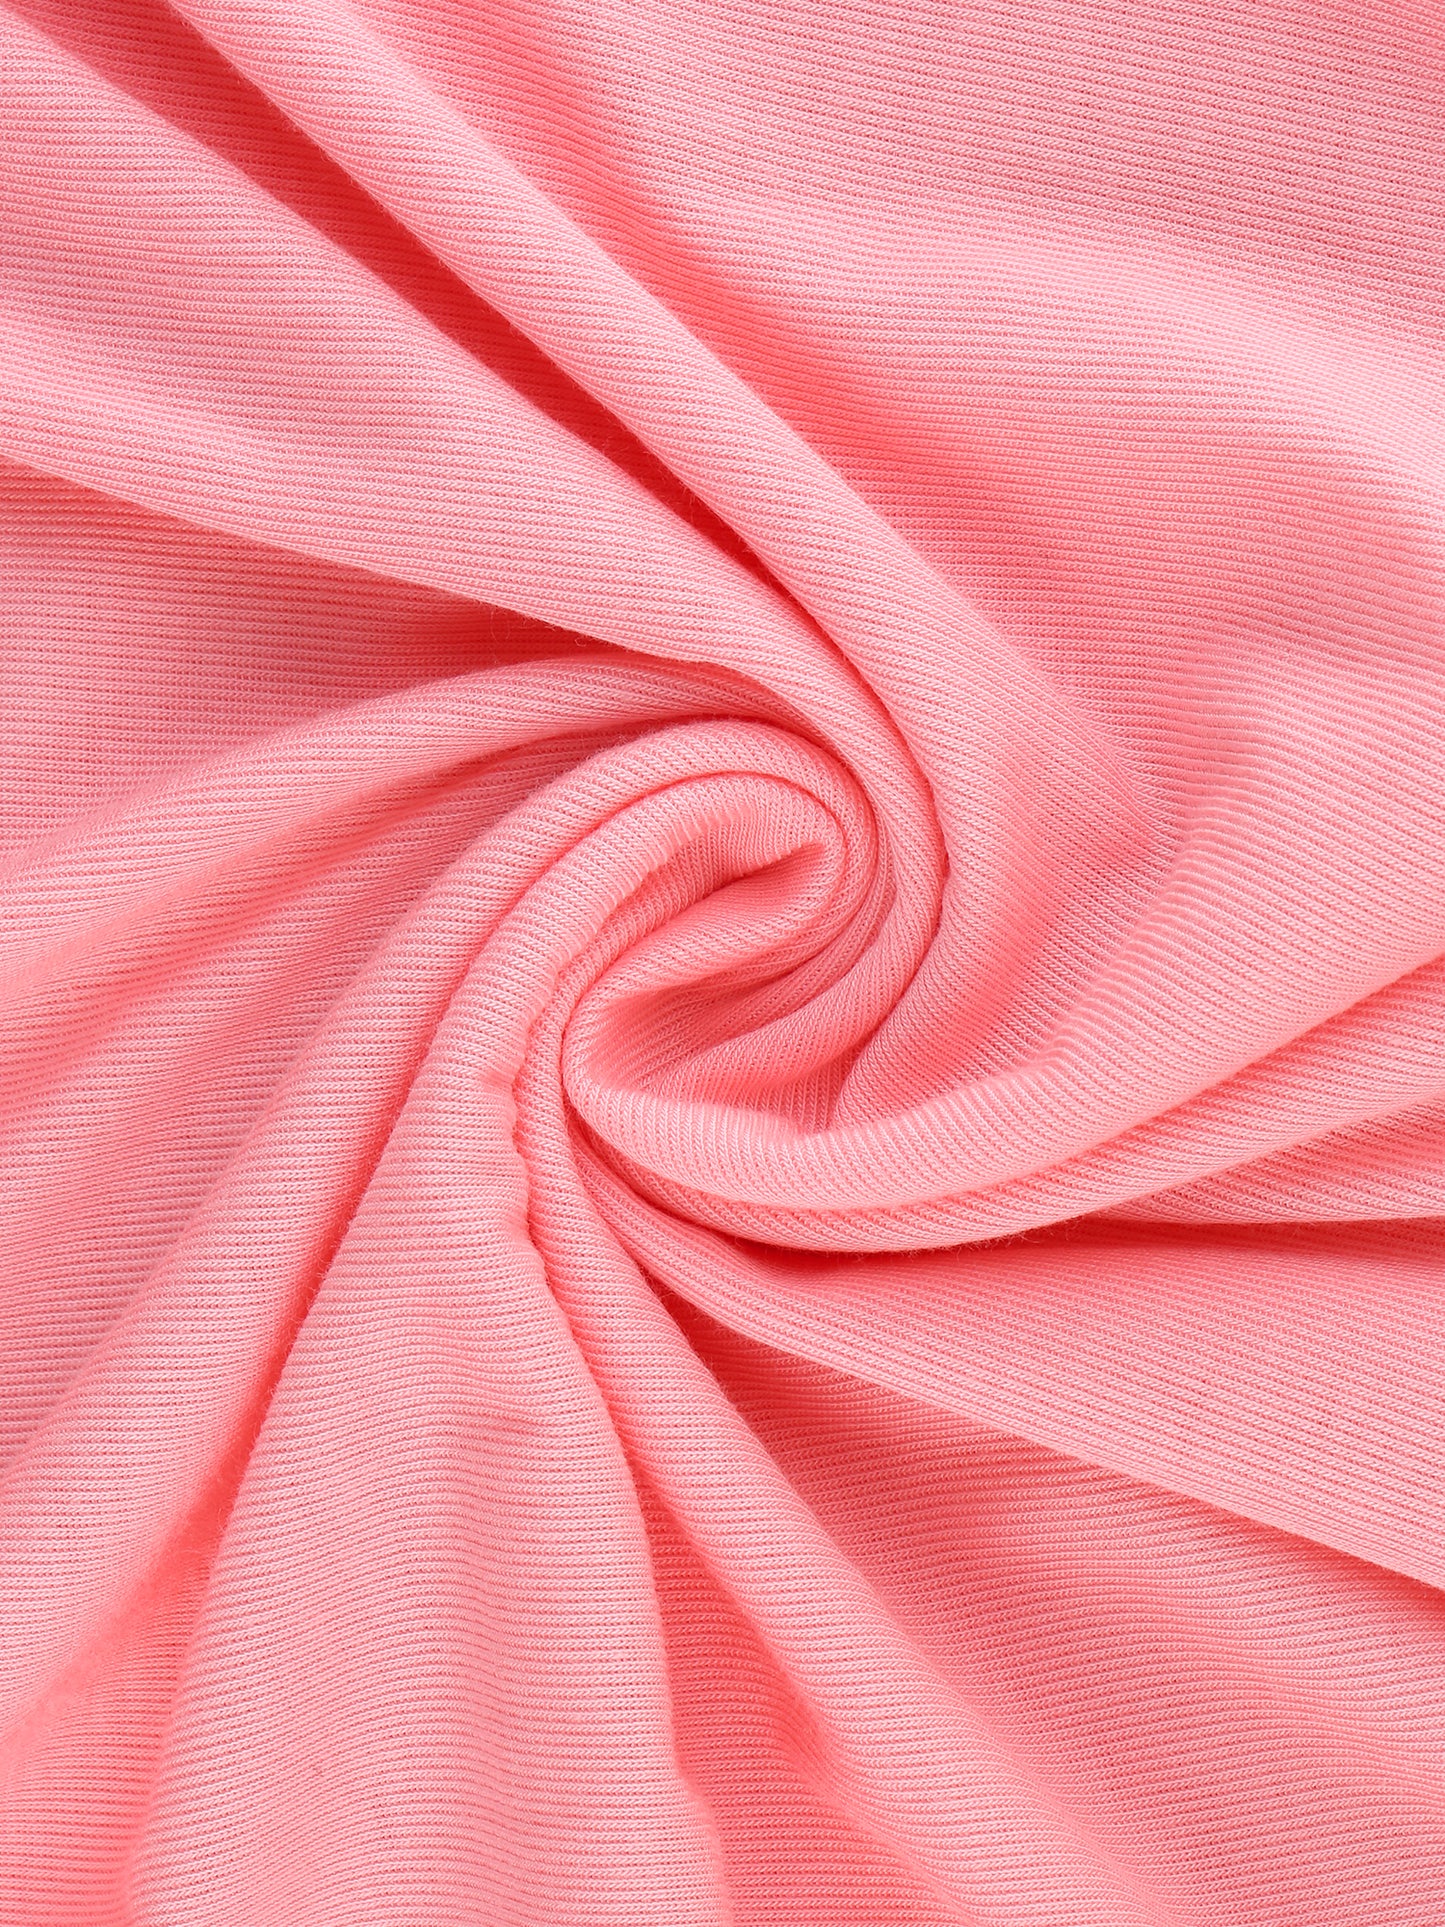 cheibear Pajama V Neck Lace Nightdress Stretchy Lounge Dress Pink